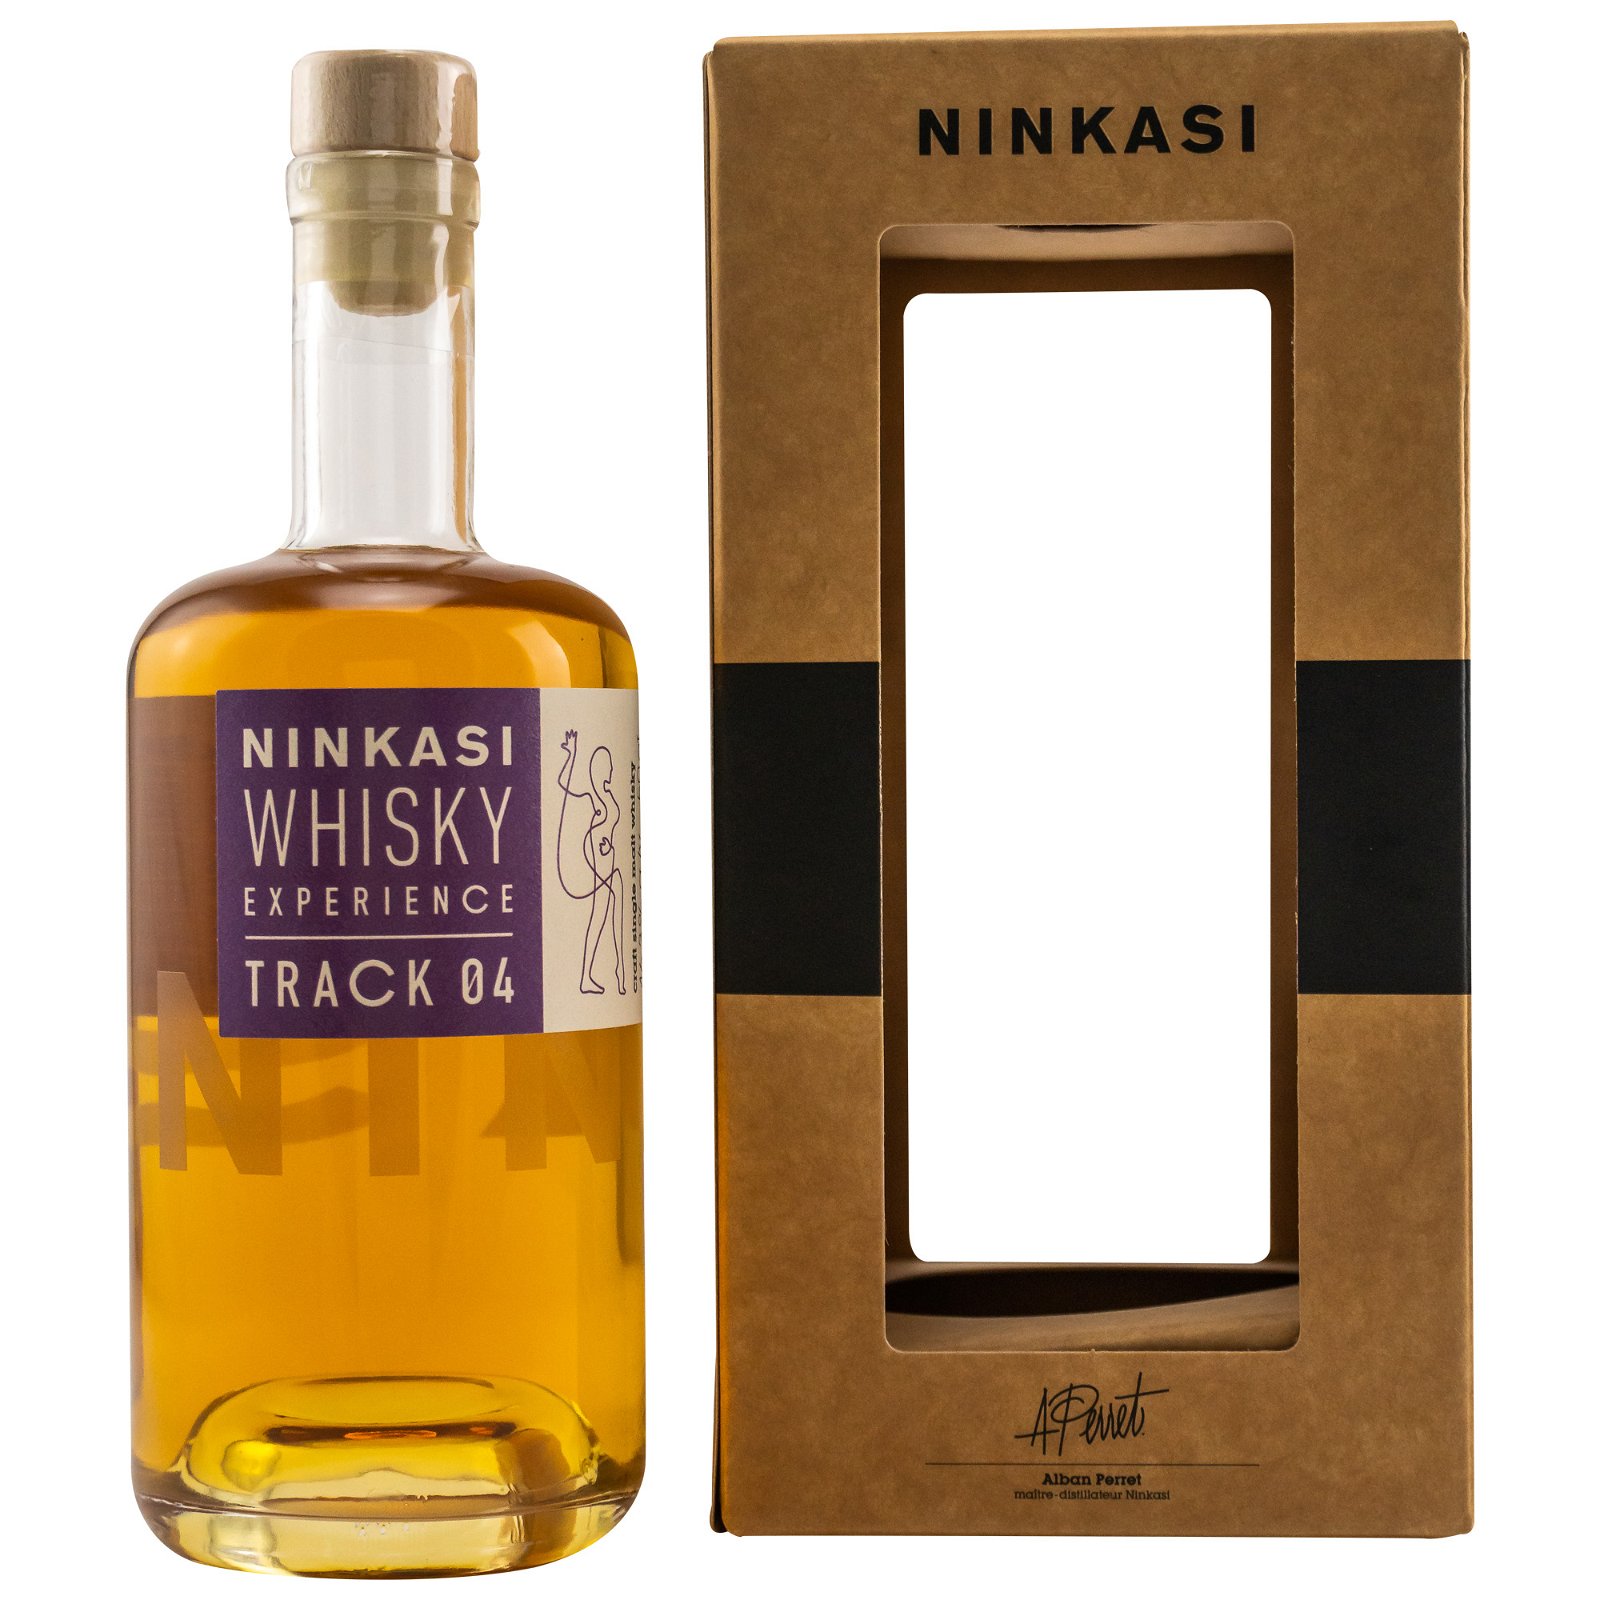 Ninkasi Whisky 2017/2020 - 3 Jahre Experience Track 4